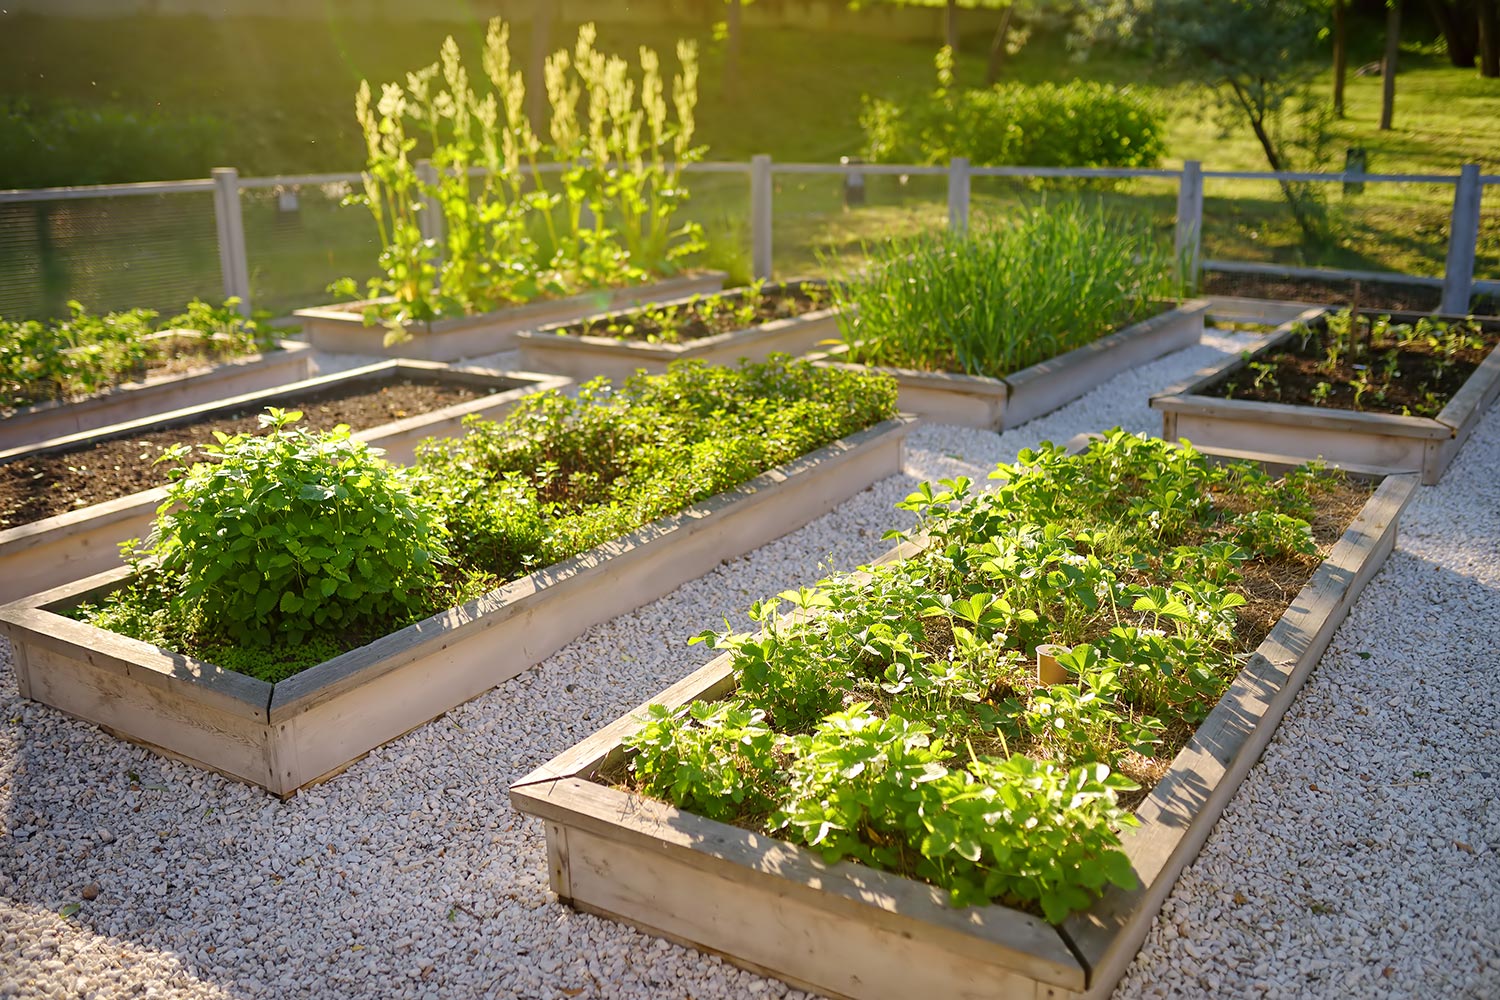 Community kitchen garden. Raised garden beds with plants in vegetable community garden